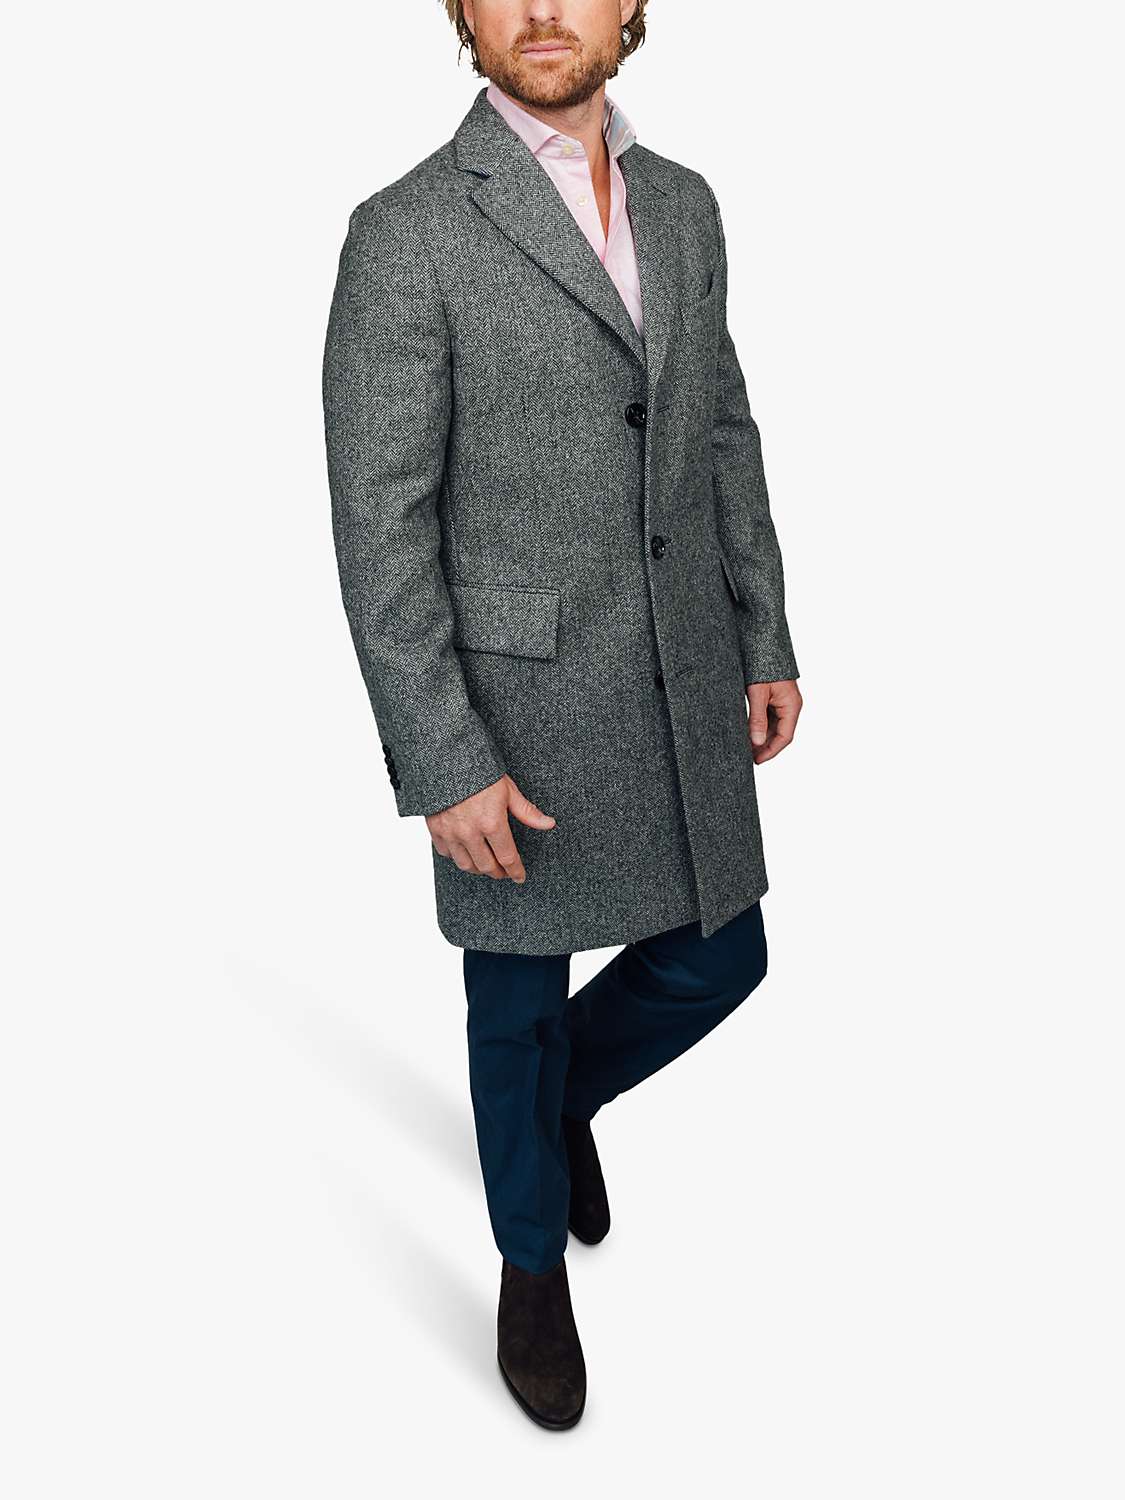 Buy KOY Wool Herringbone Tailored Fit Overcoat, Charcoal Online at johnlewis.com